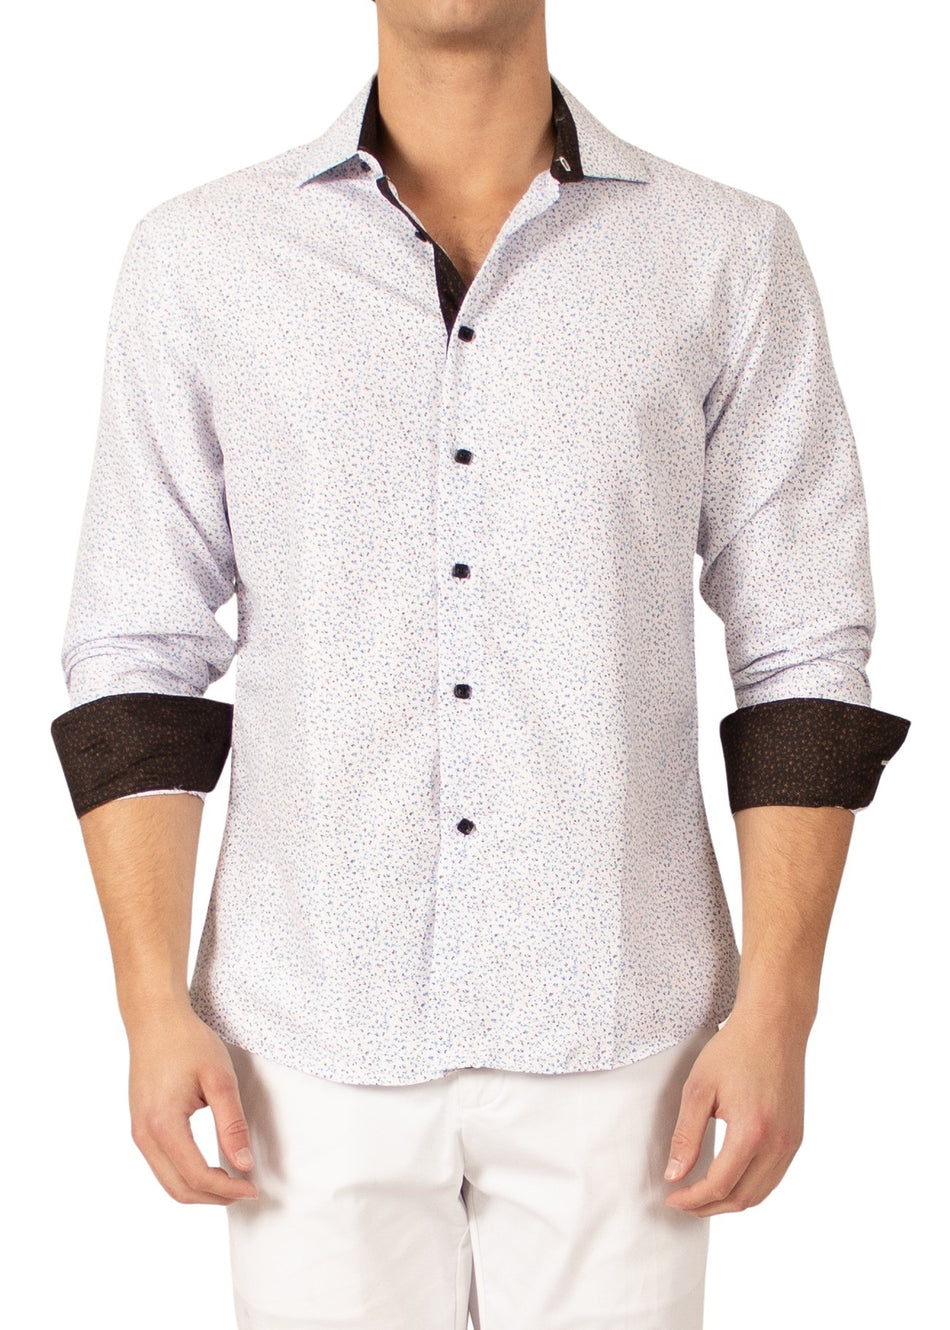 232330- White Long Sleeve Shirt